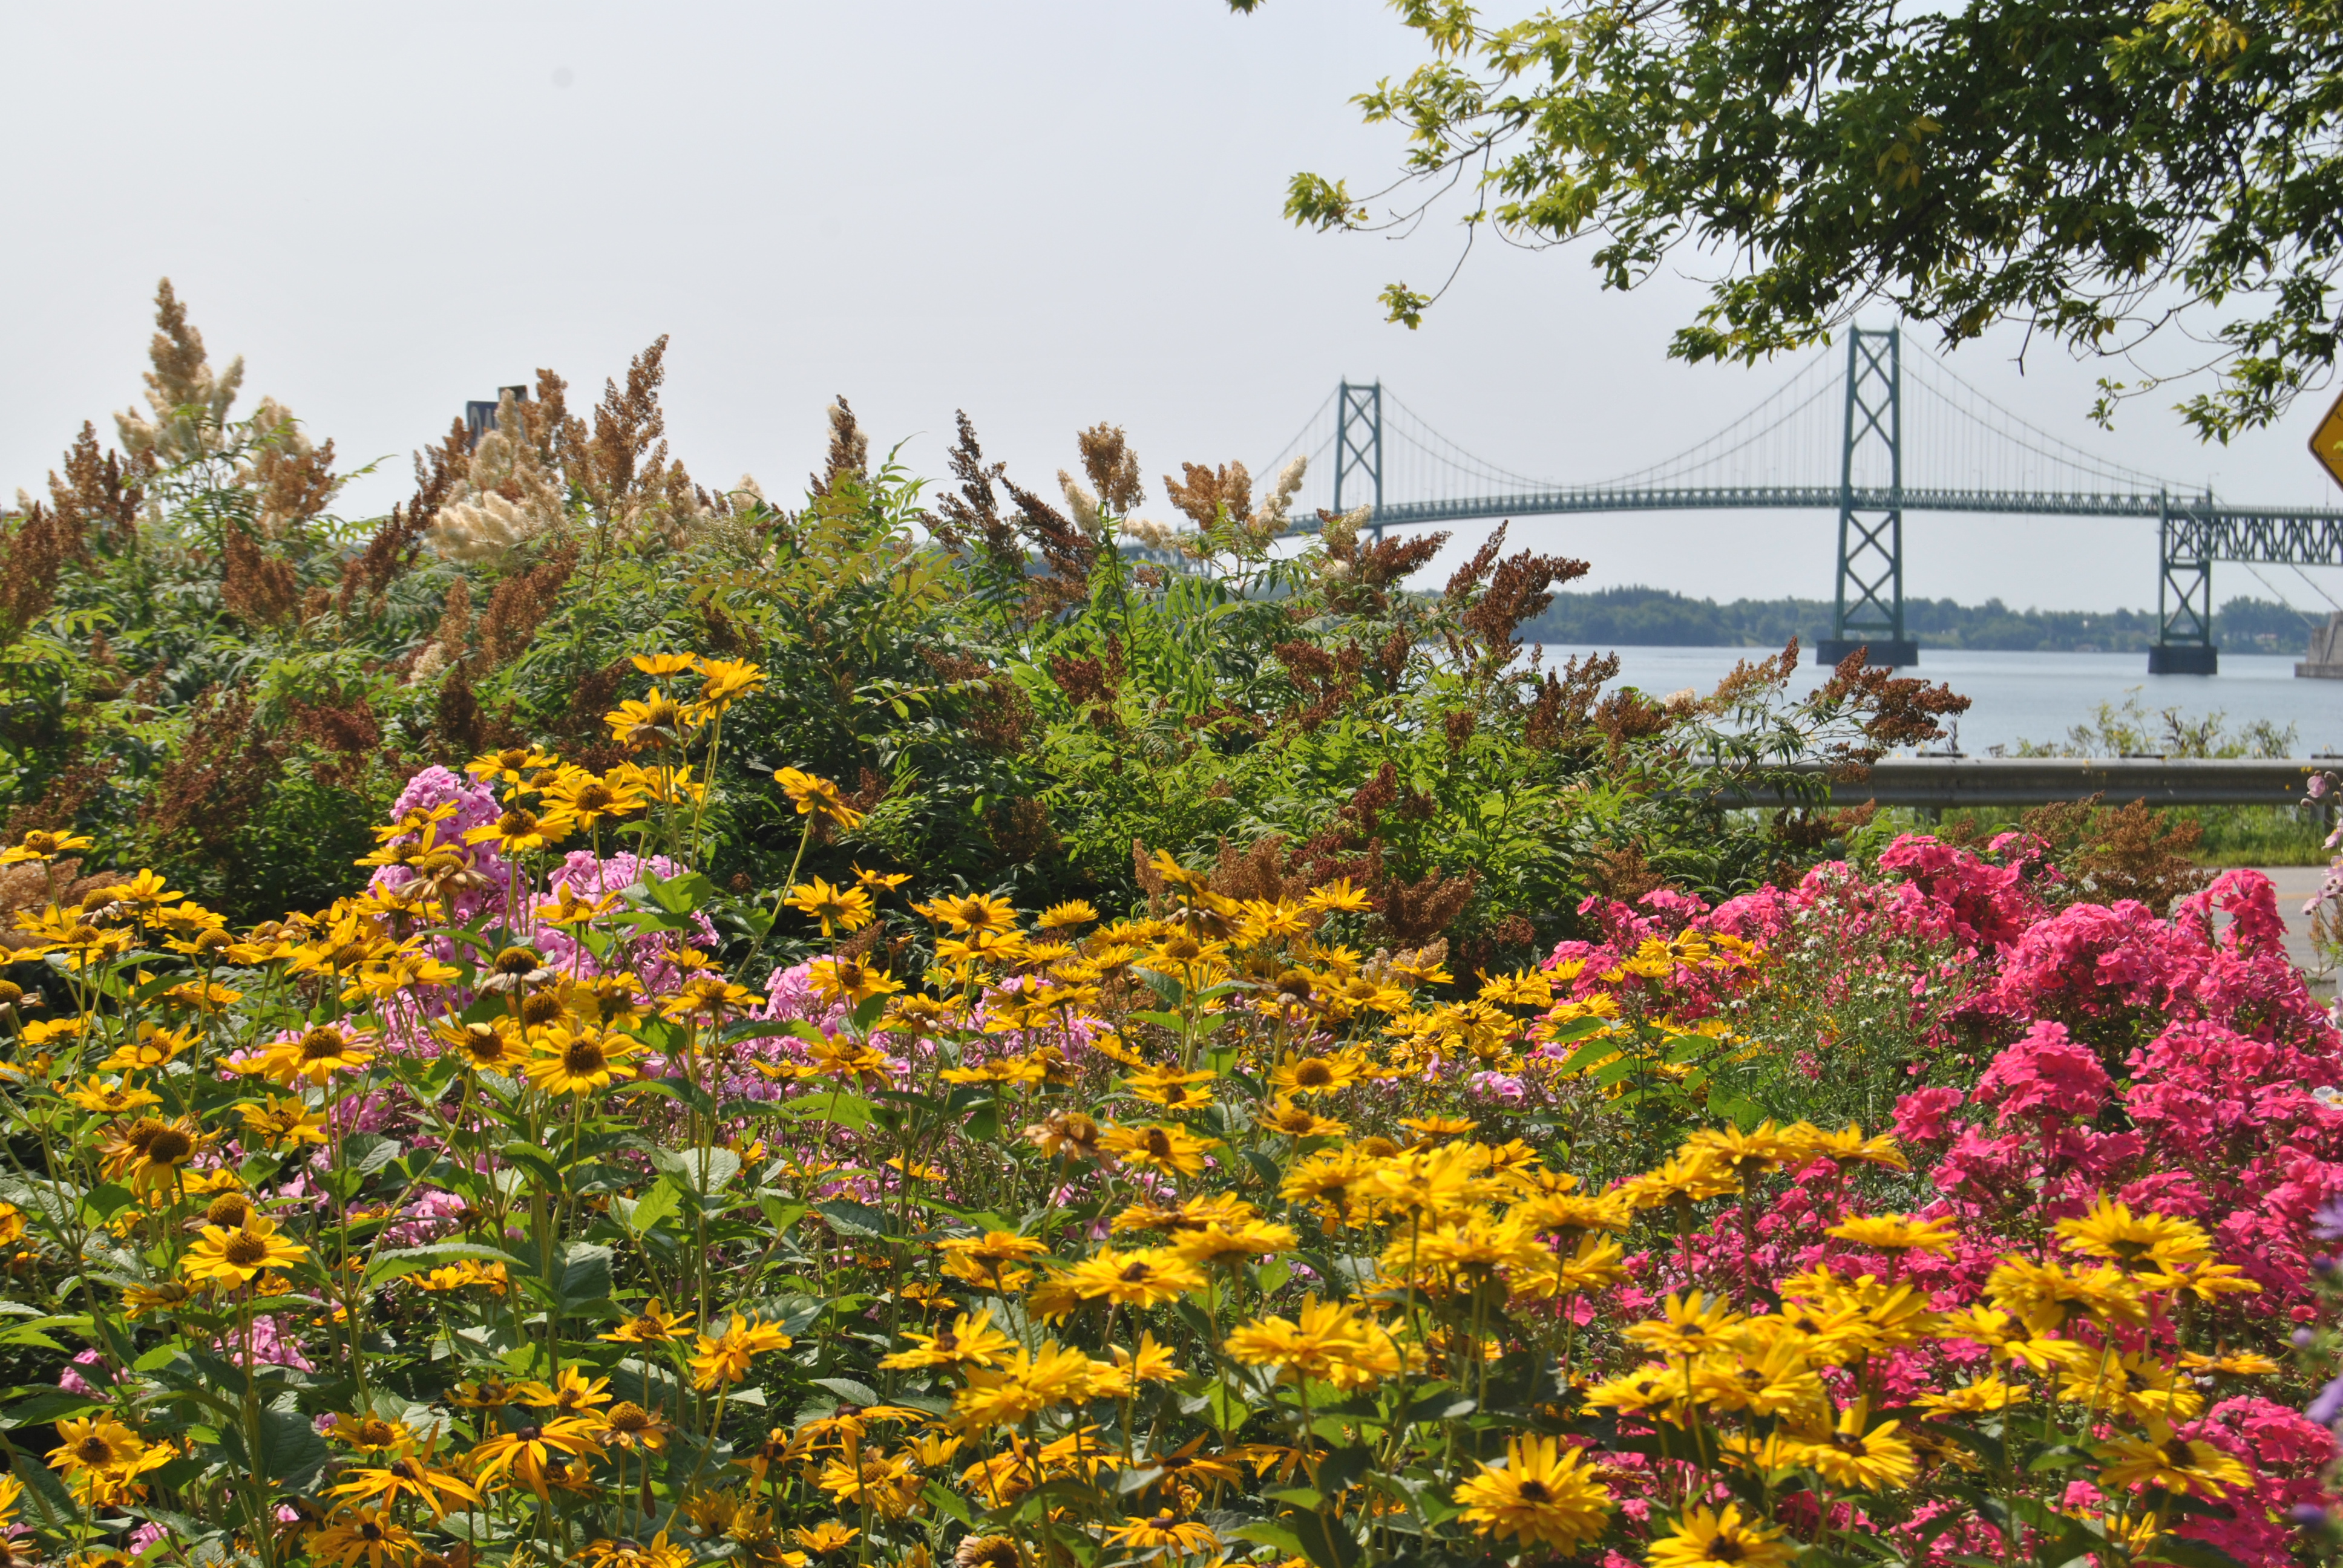 Flowers along the St. Lawrence River facing an international bridge